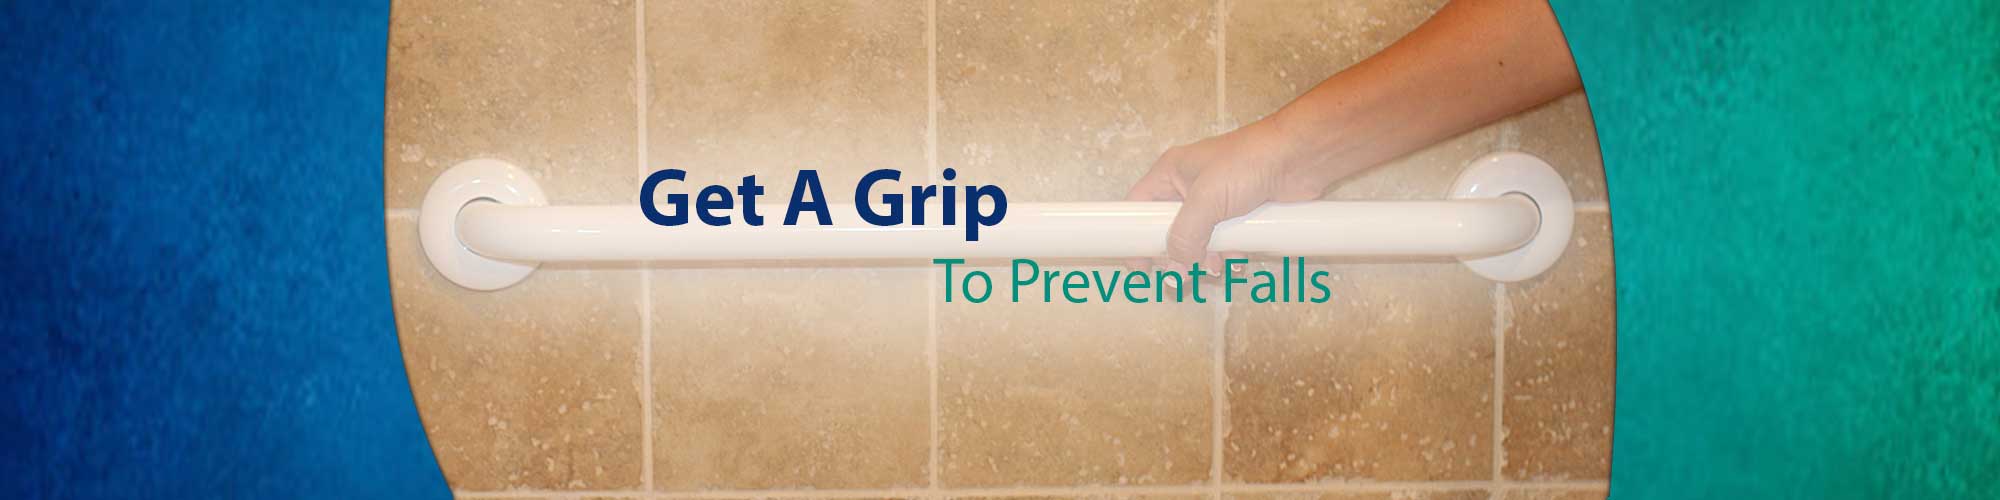 Shower Grip: Get a Grip to Prevent Falls